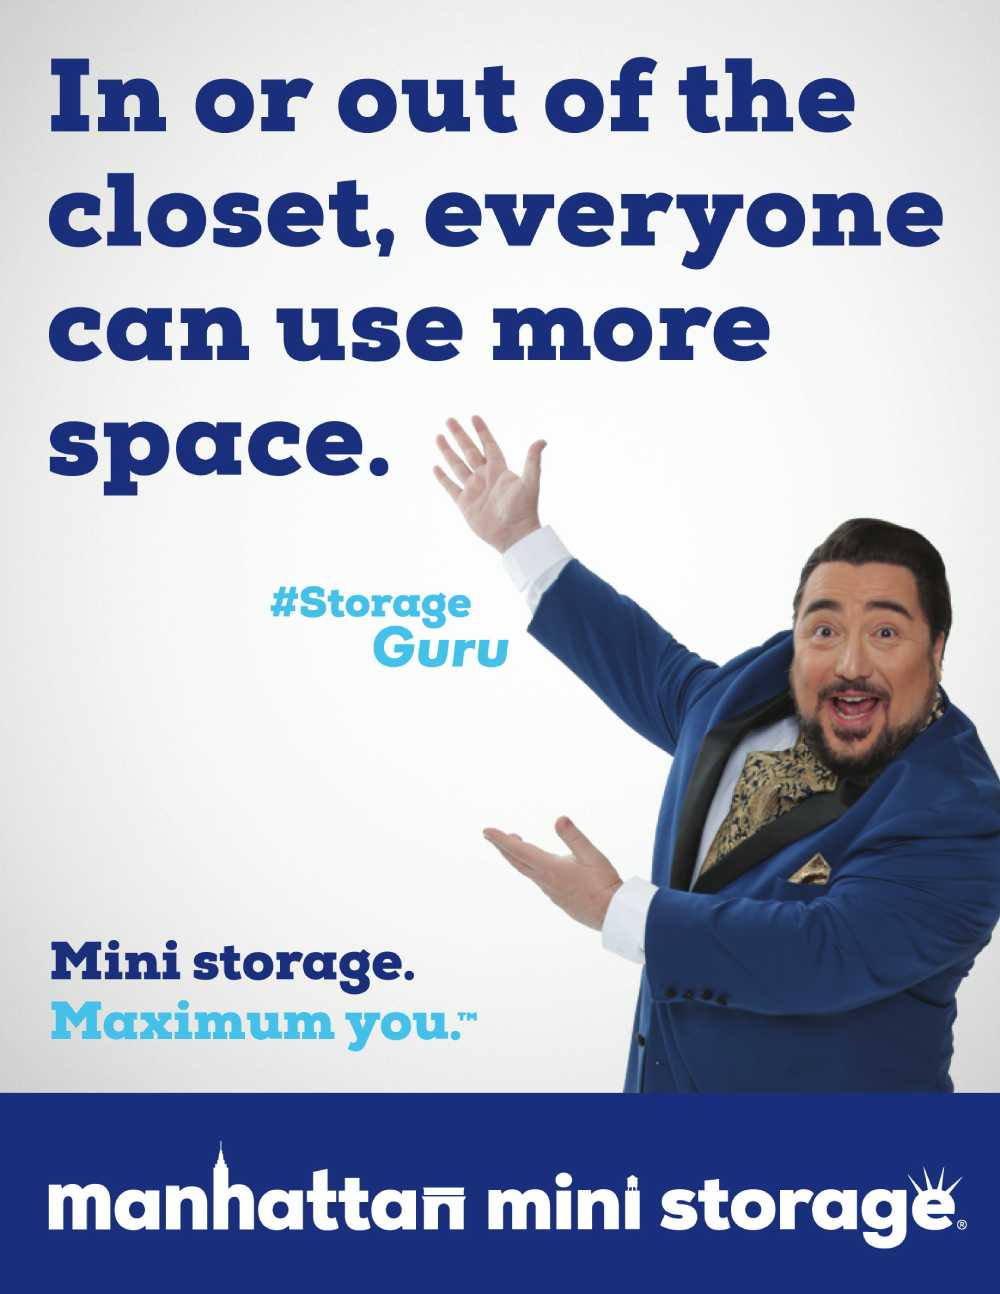 Manhattan Mini Storage Billboard Everyone Needs Space